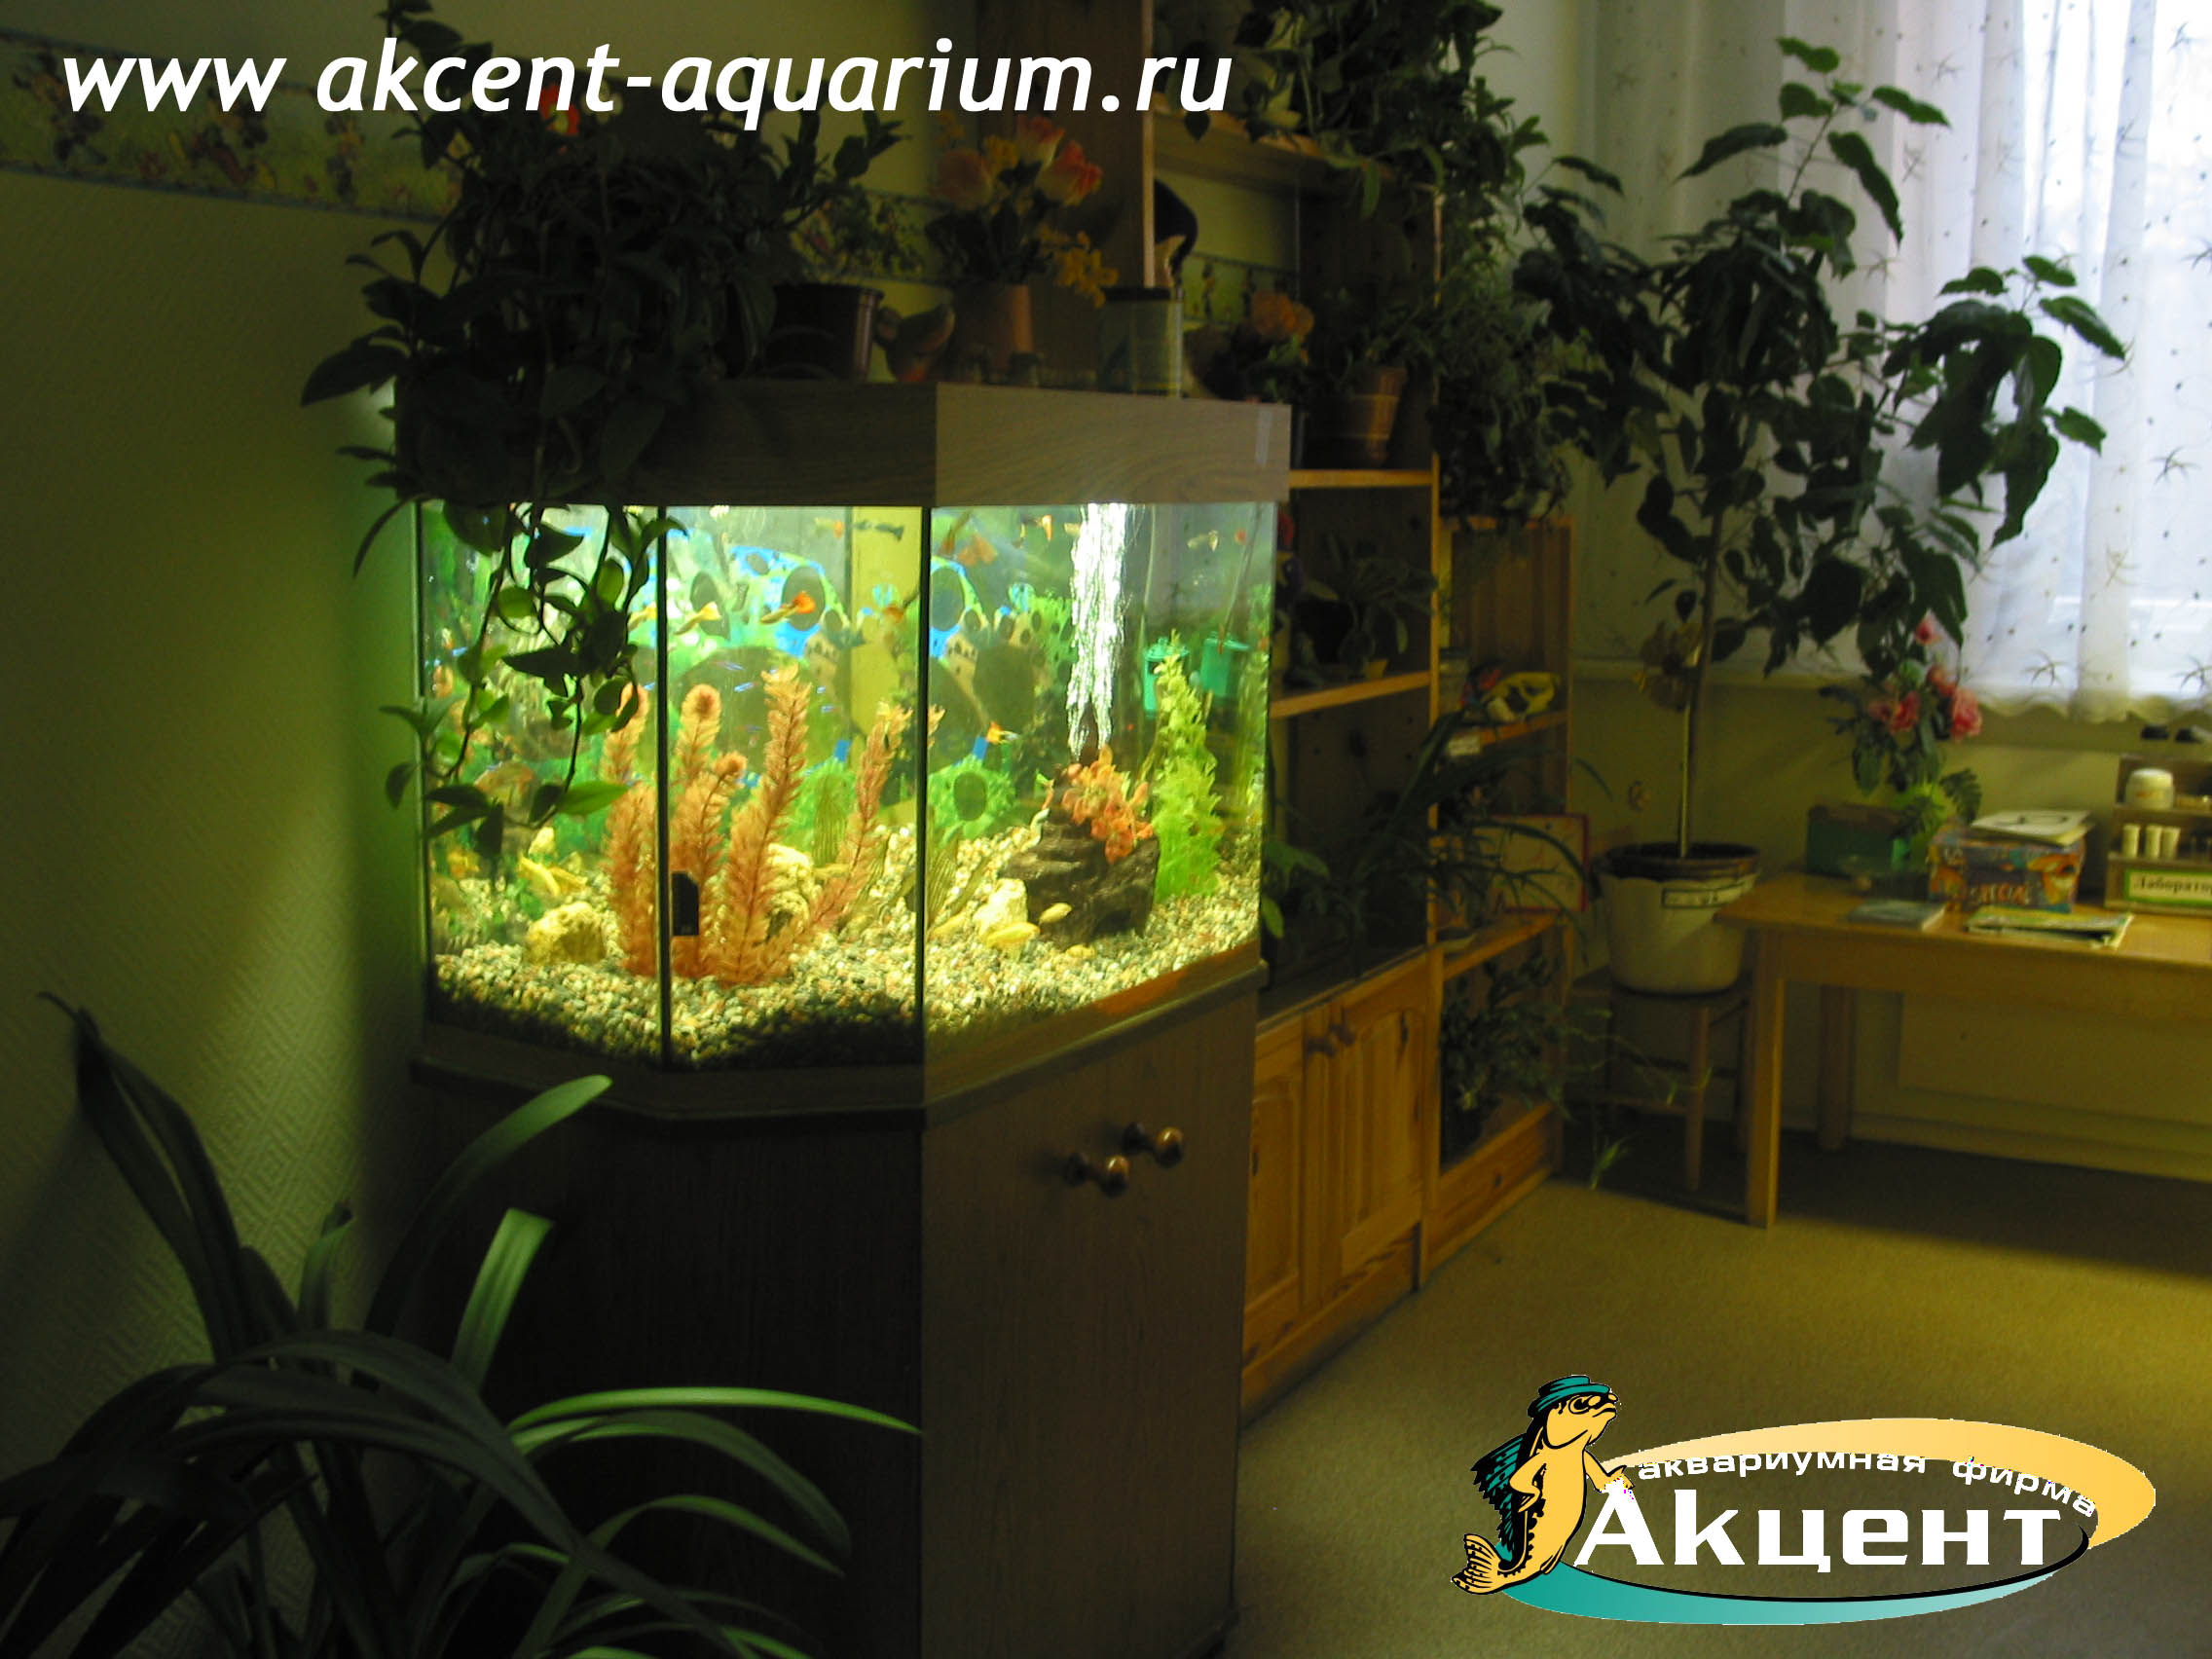 Акцент-аквариум, аквариум 160 литров, детский сад